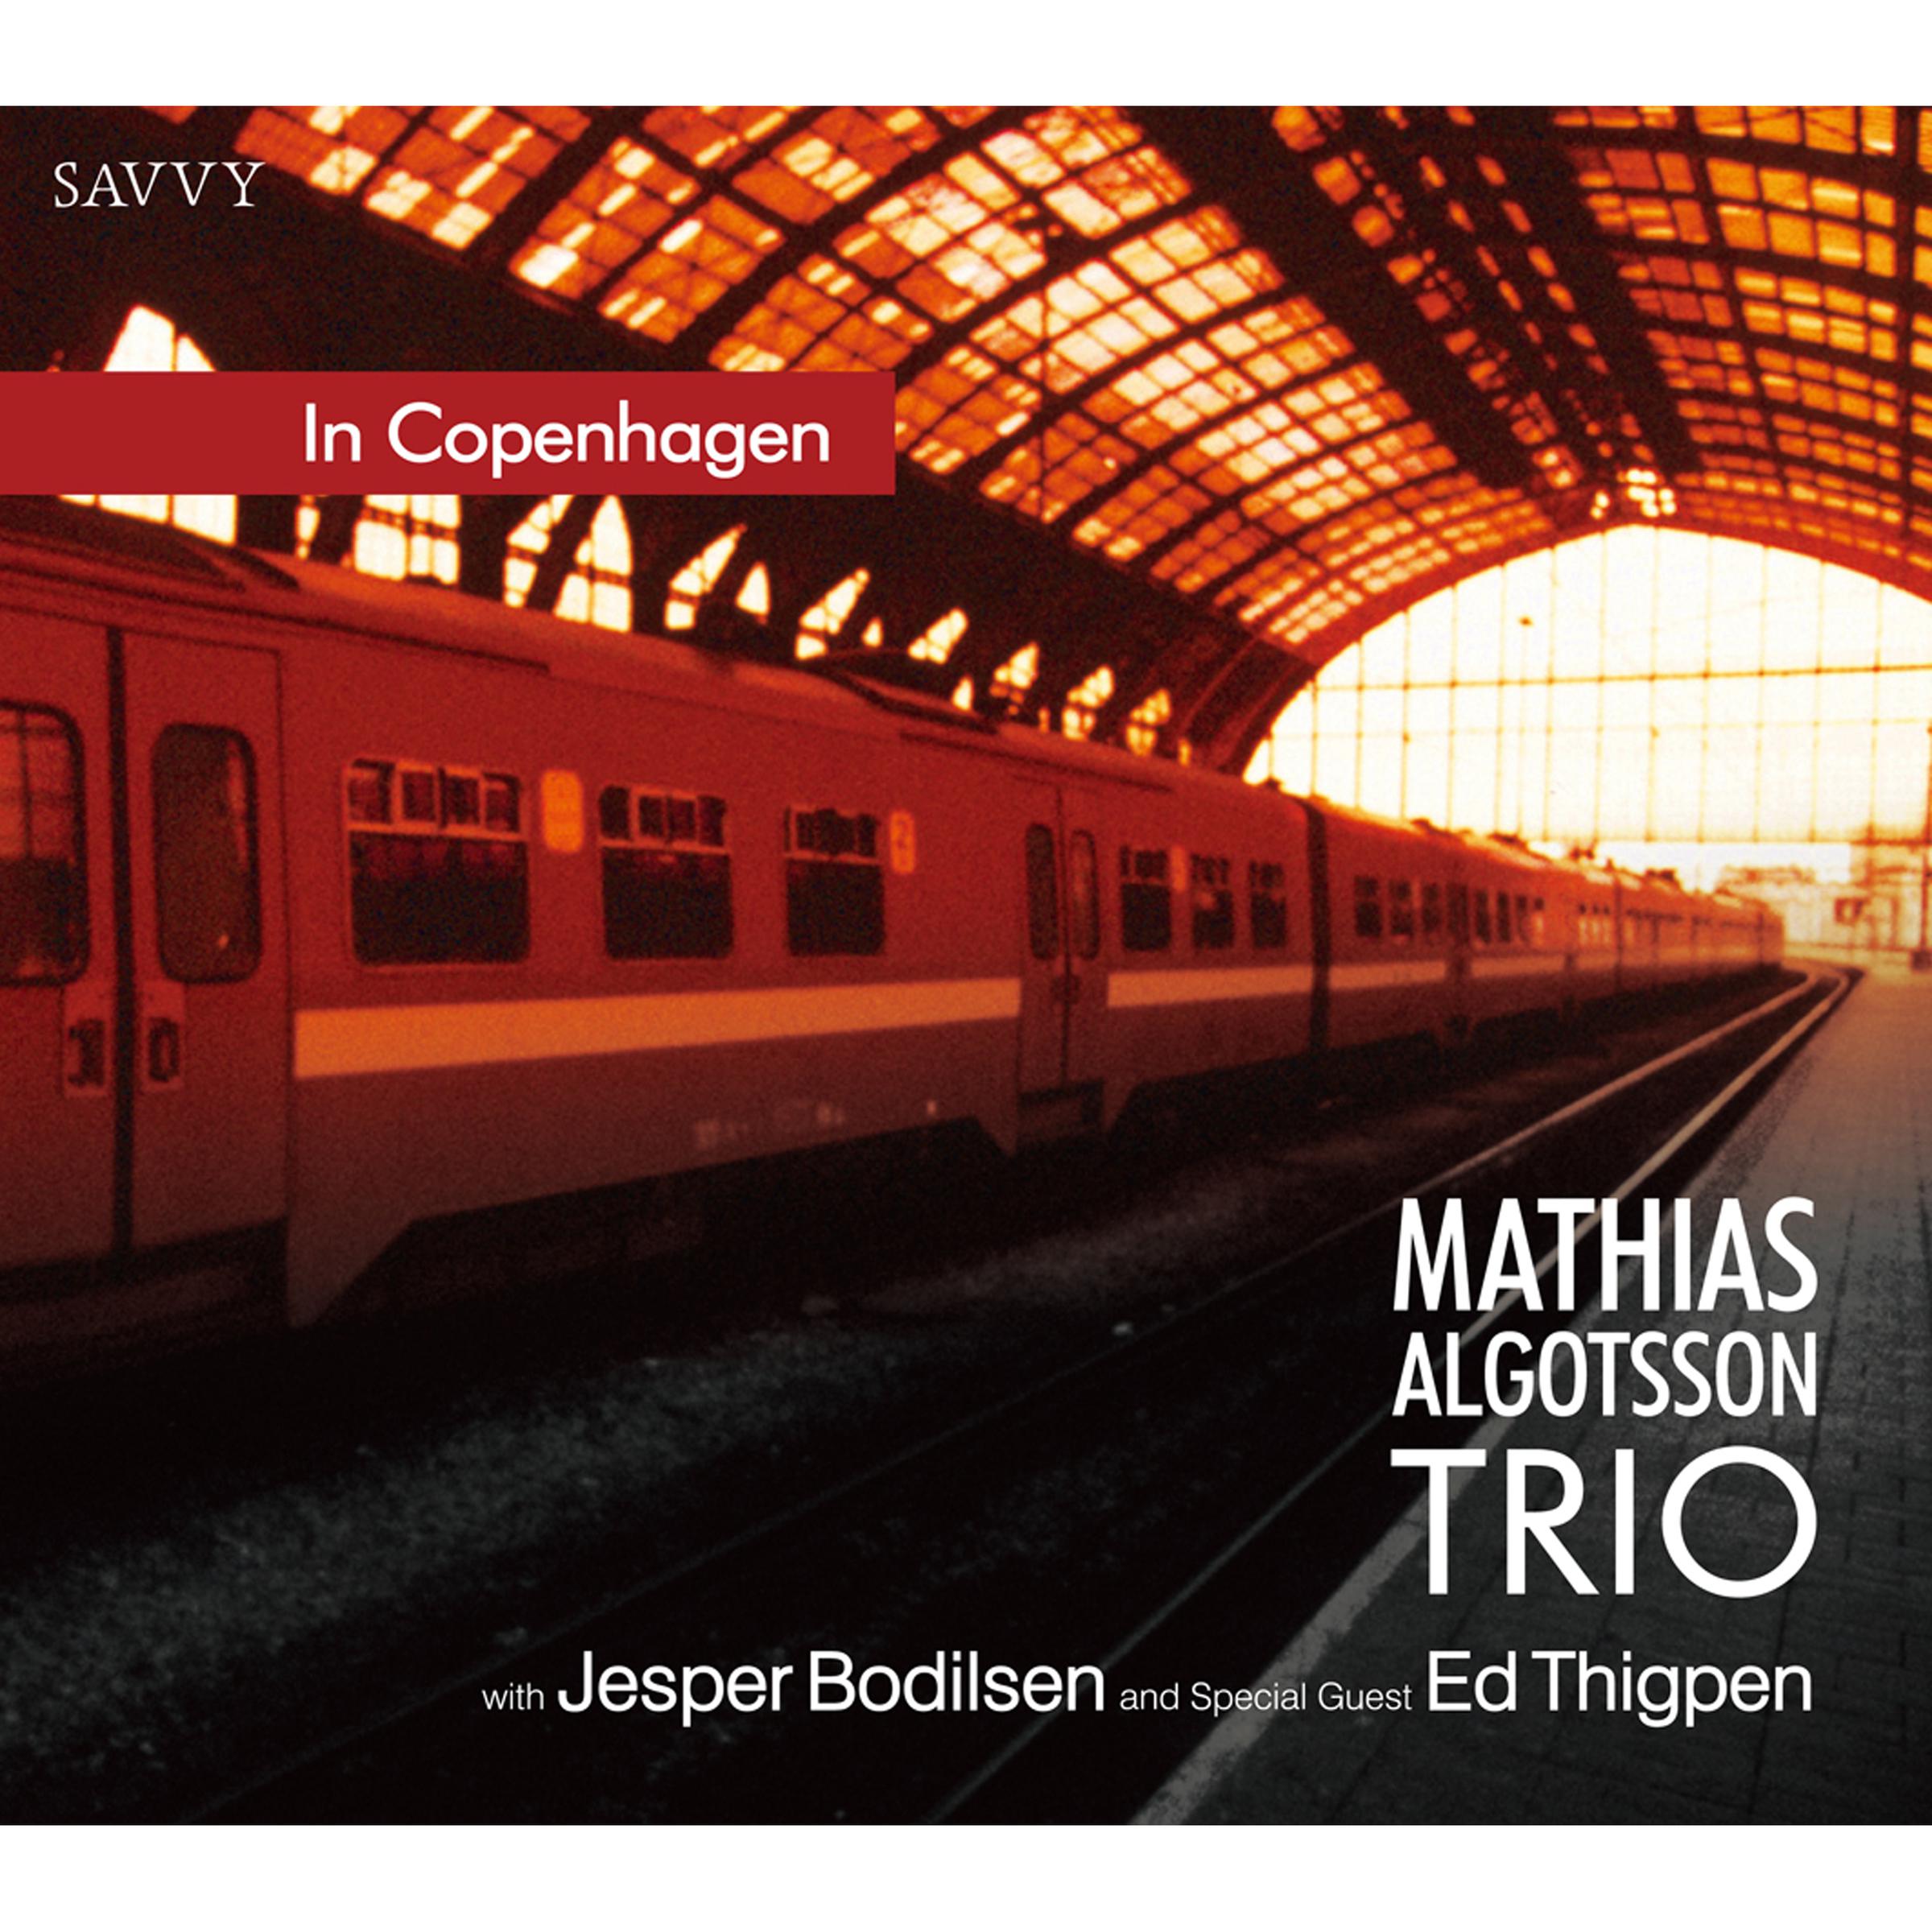 "In Copenhagen" Mathias Algotsson with Jesper Bodilsen and Special Guest Ed Thigpen